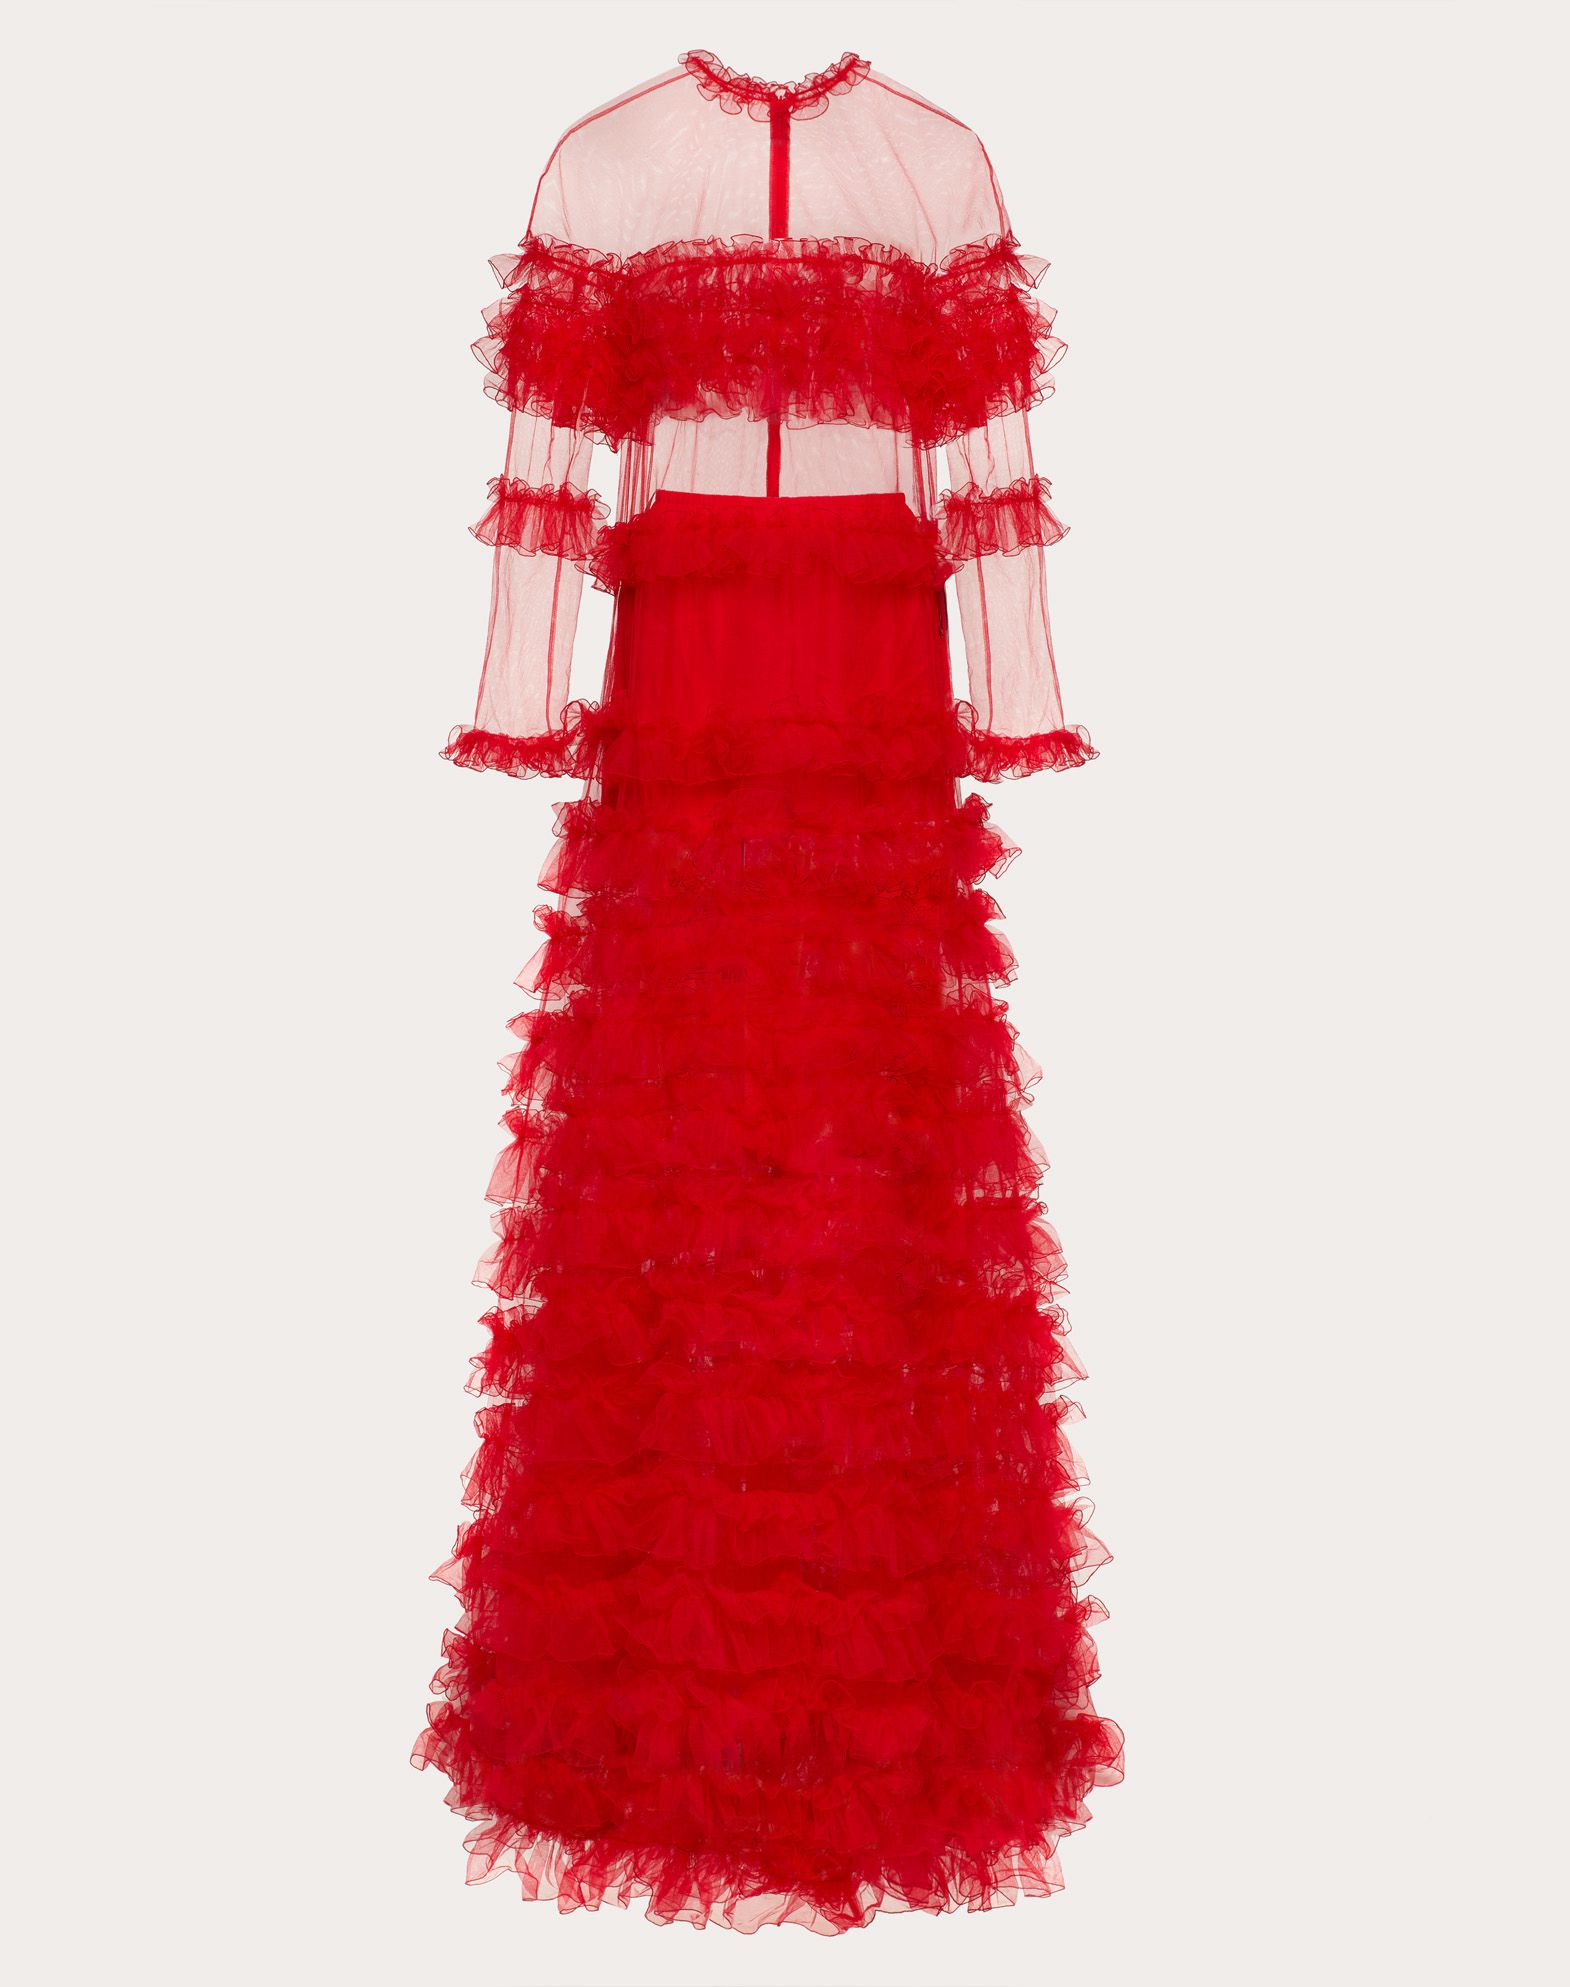 maison valentino red dress